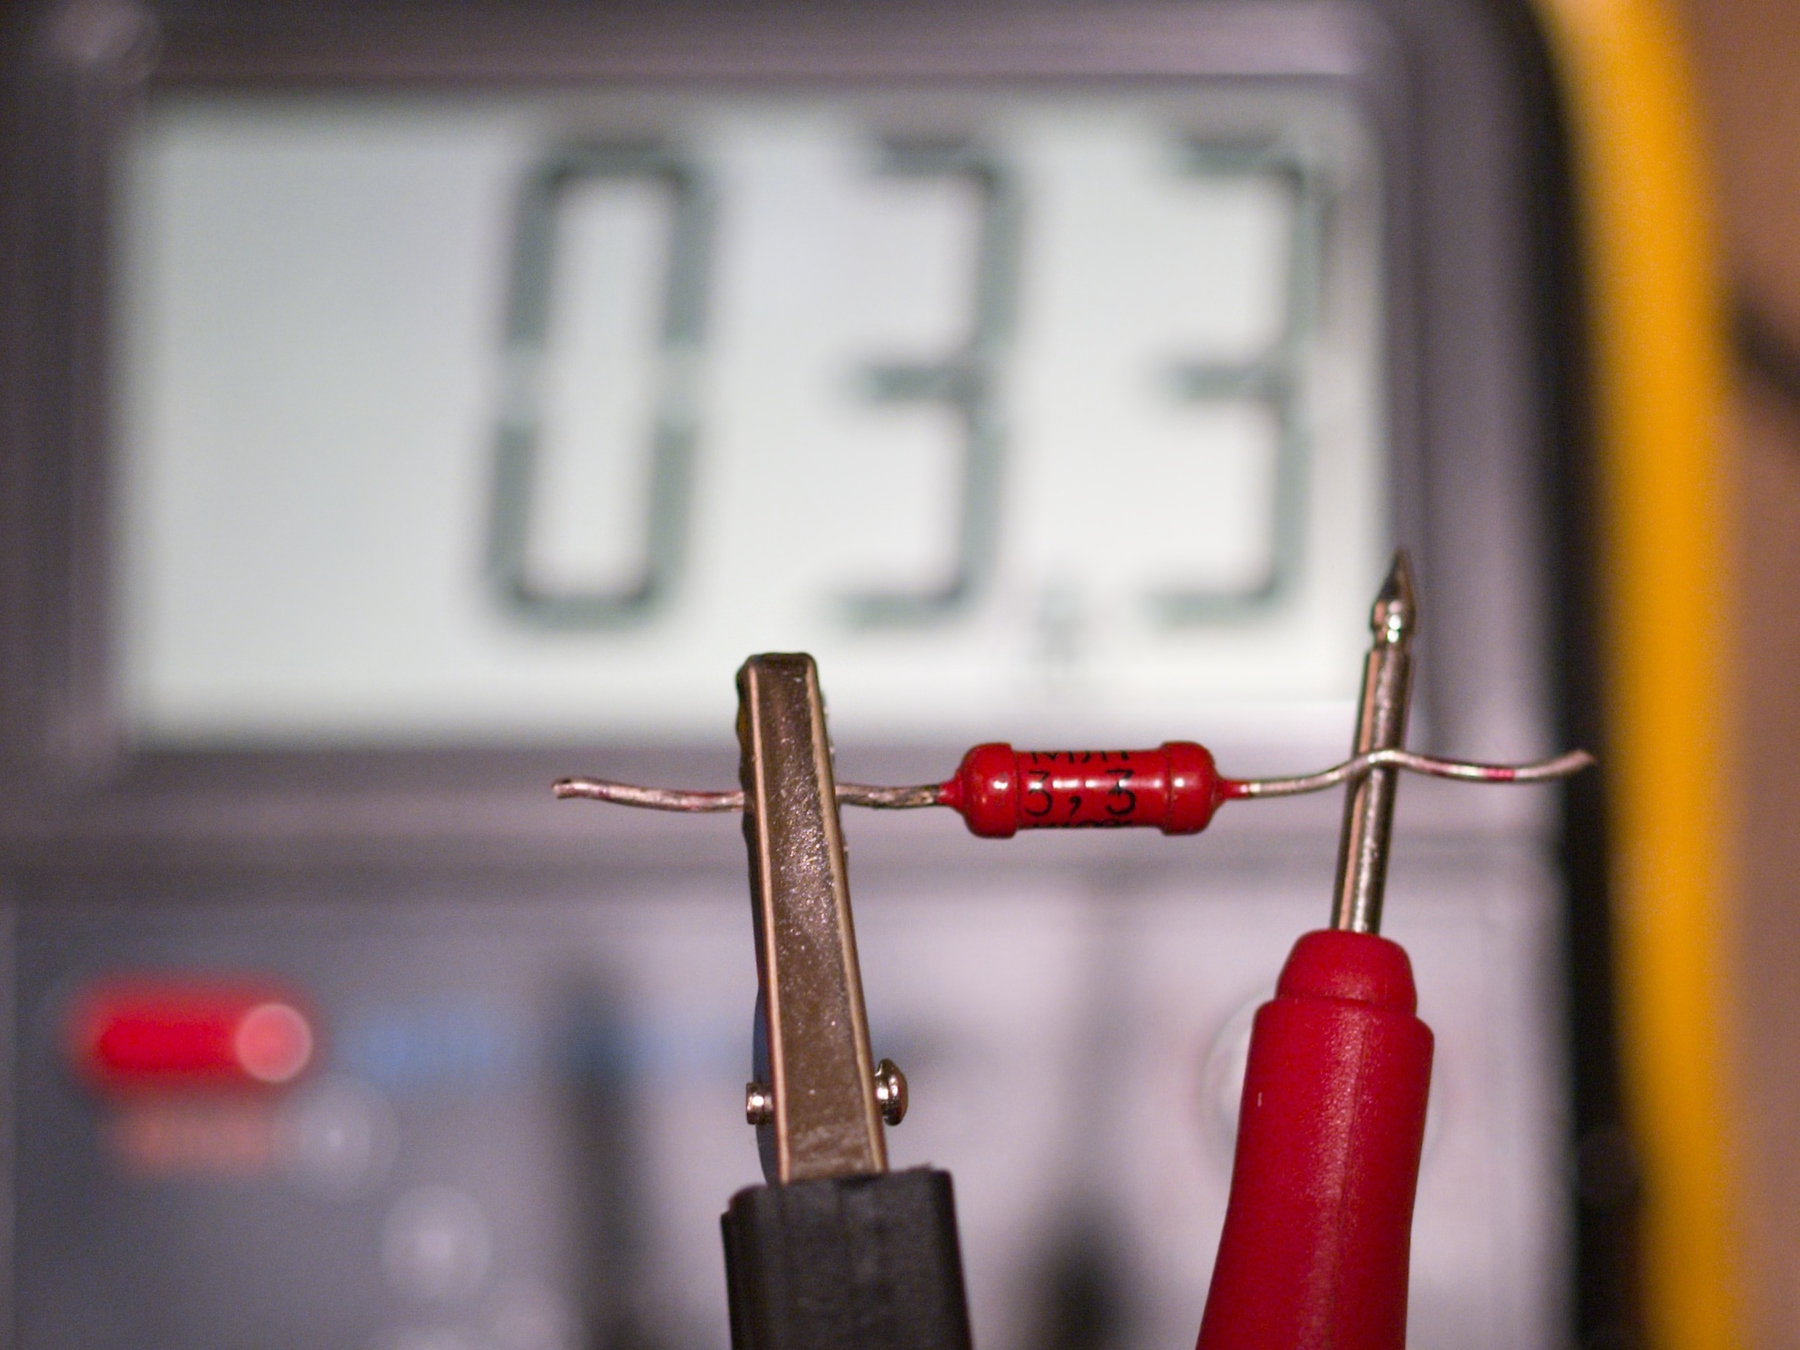 Measuring resistance, Electronics, Measure, Measuring, Multimeter, HQ Photo